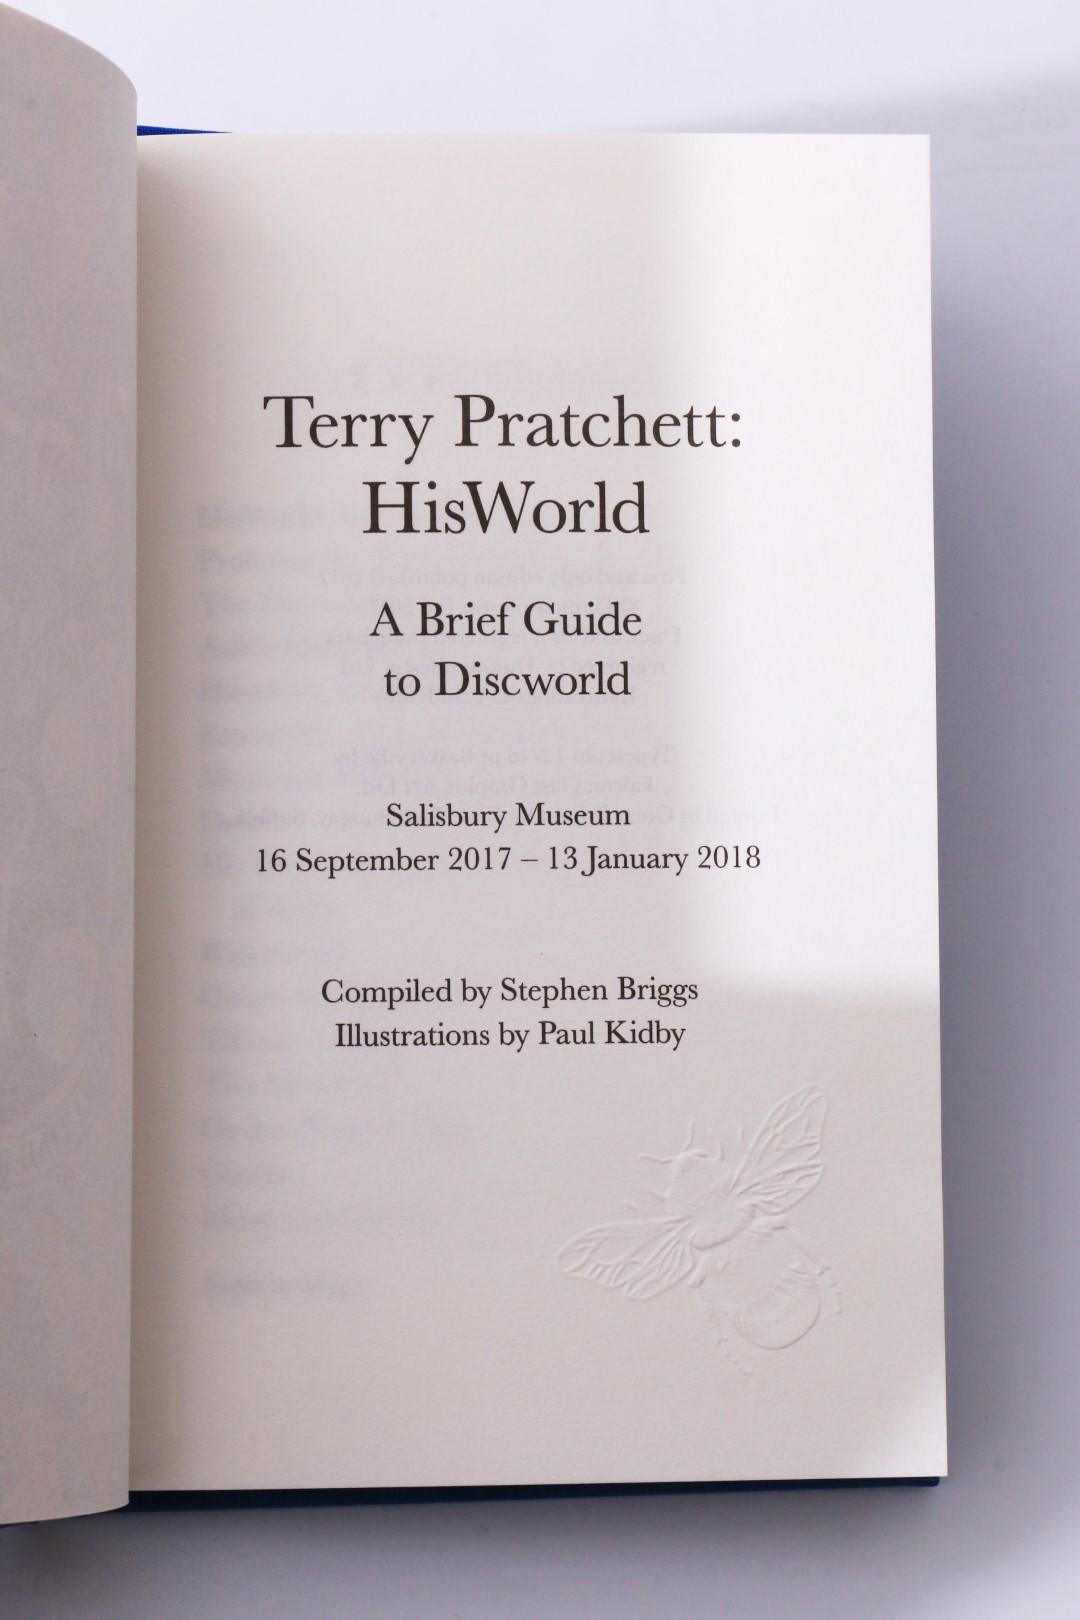 Stephen Briggs [Terry Pratchett interest] - Little Blue Book - HisWorld: A Brief Guide to Discworld - Dunmenifestin Ltd, 2017, First Edition.